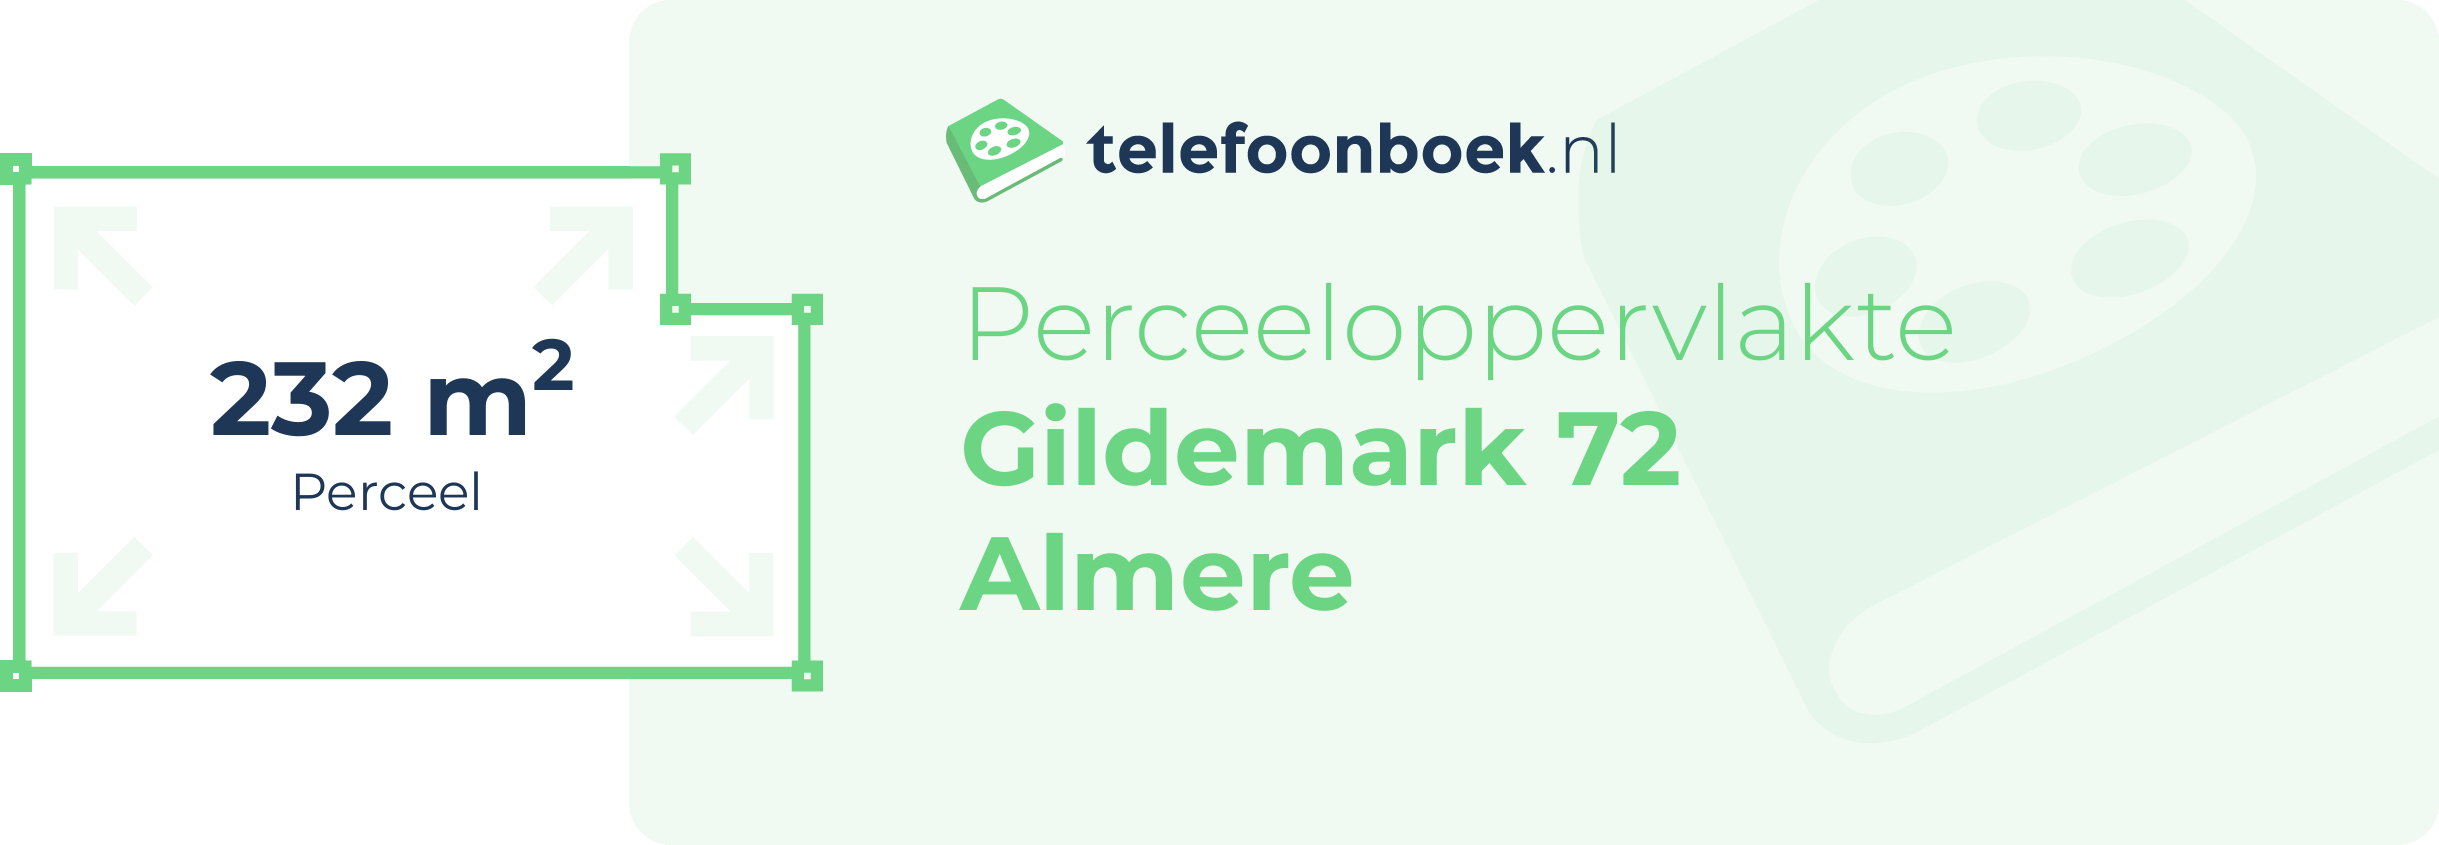 Perceeloppervlakte Gildemark 72 Almere